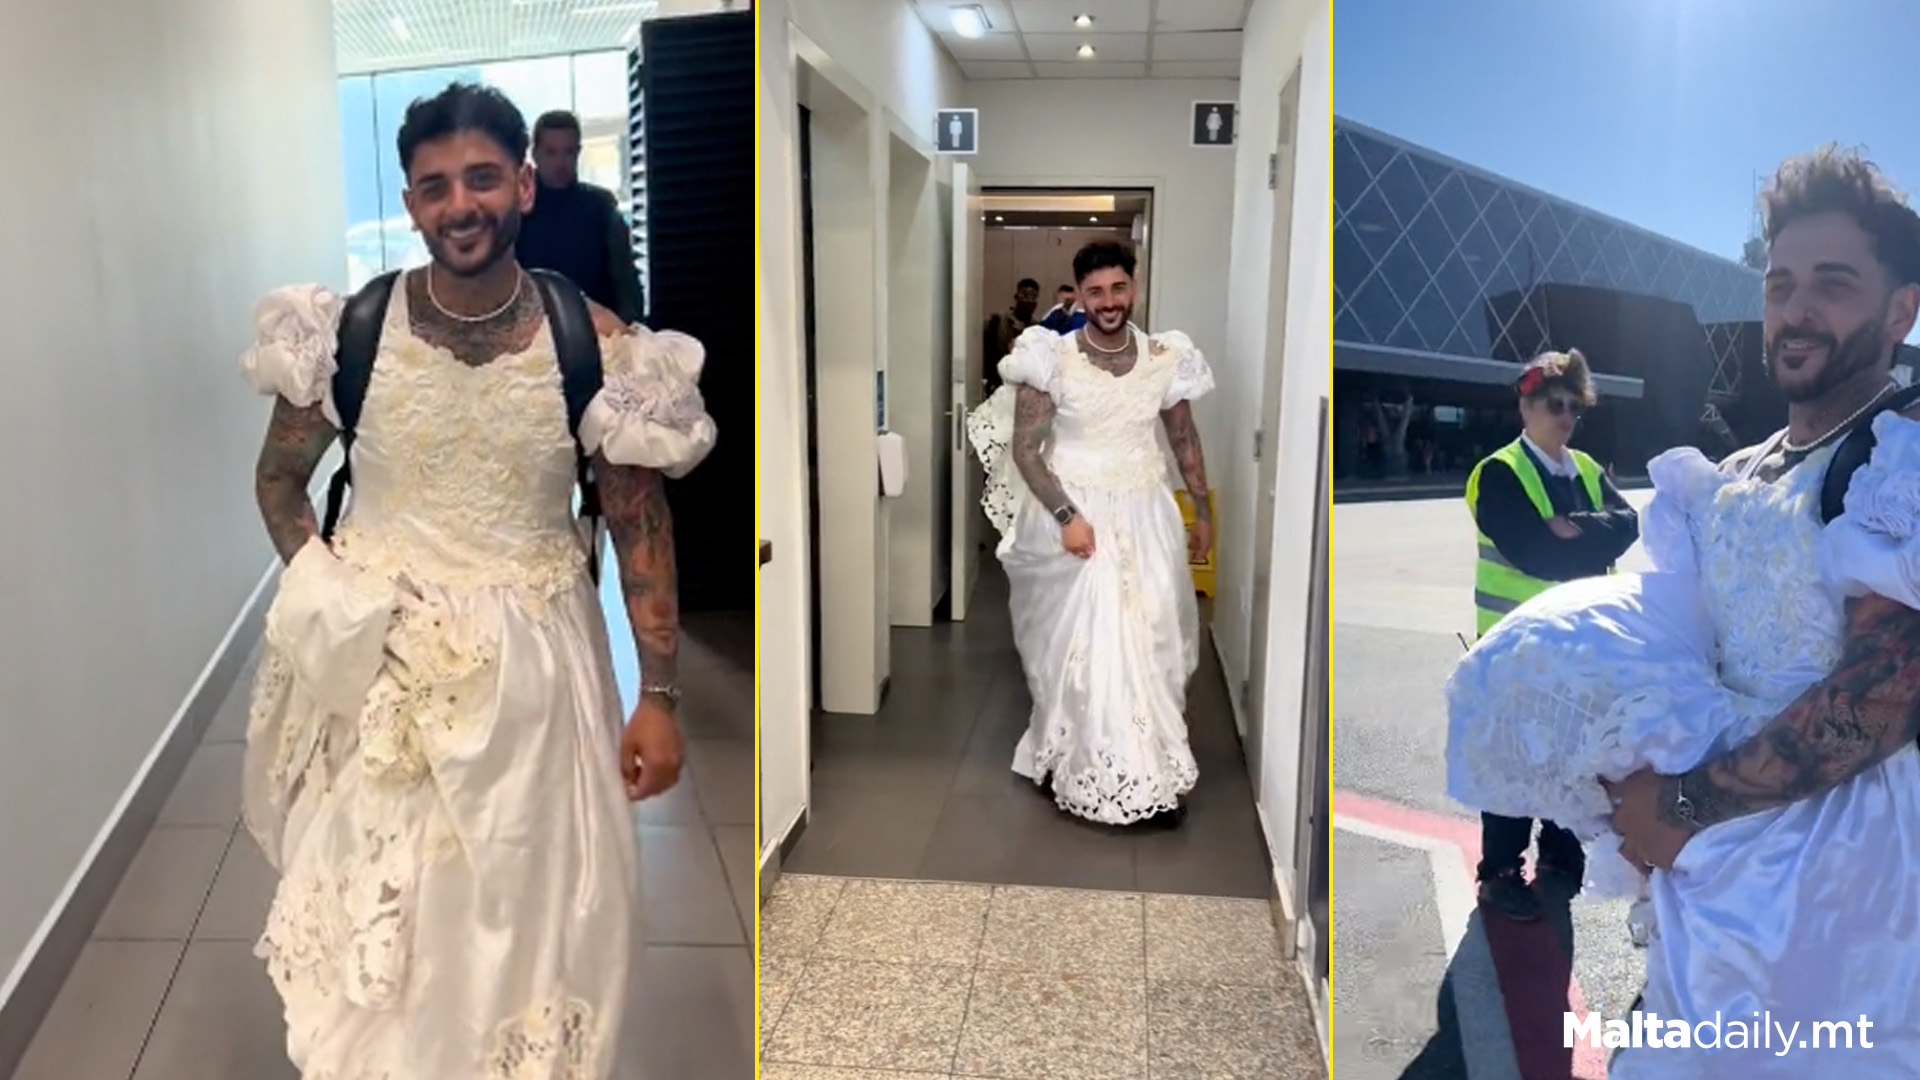 Maltese Man Dressed In Bride Dress Ahead Of Bachelor's Trip